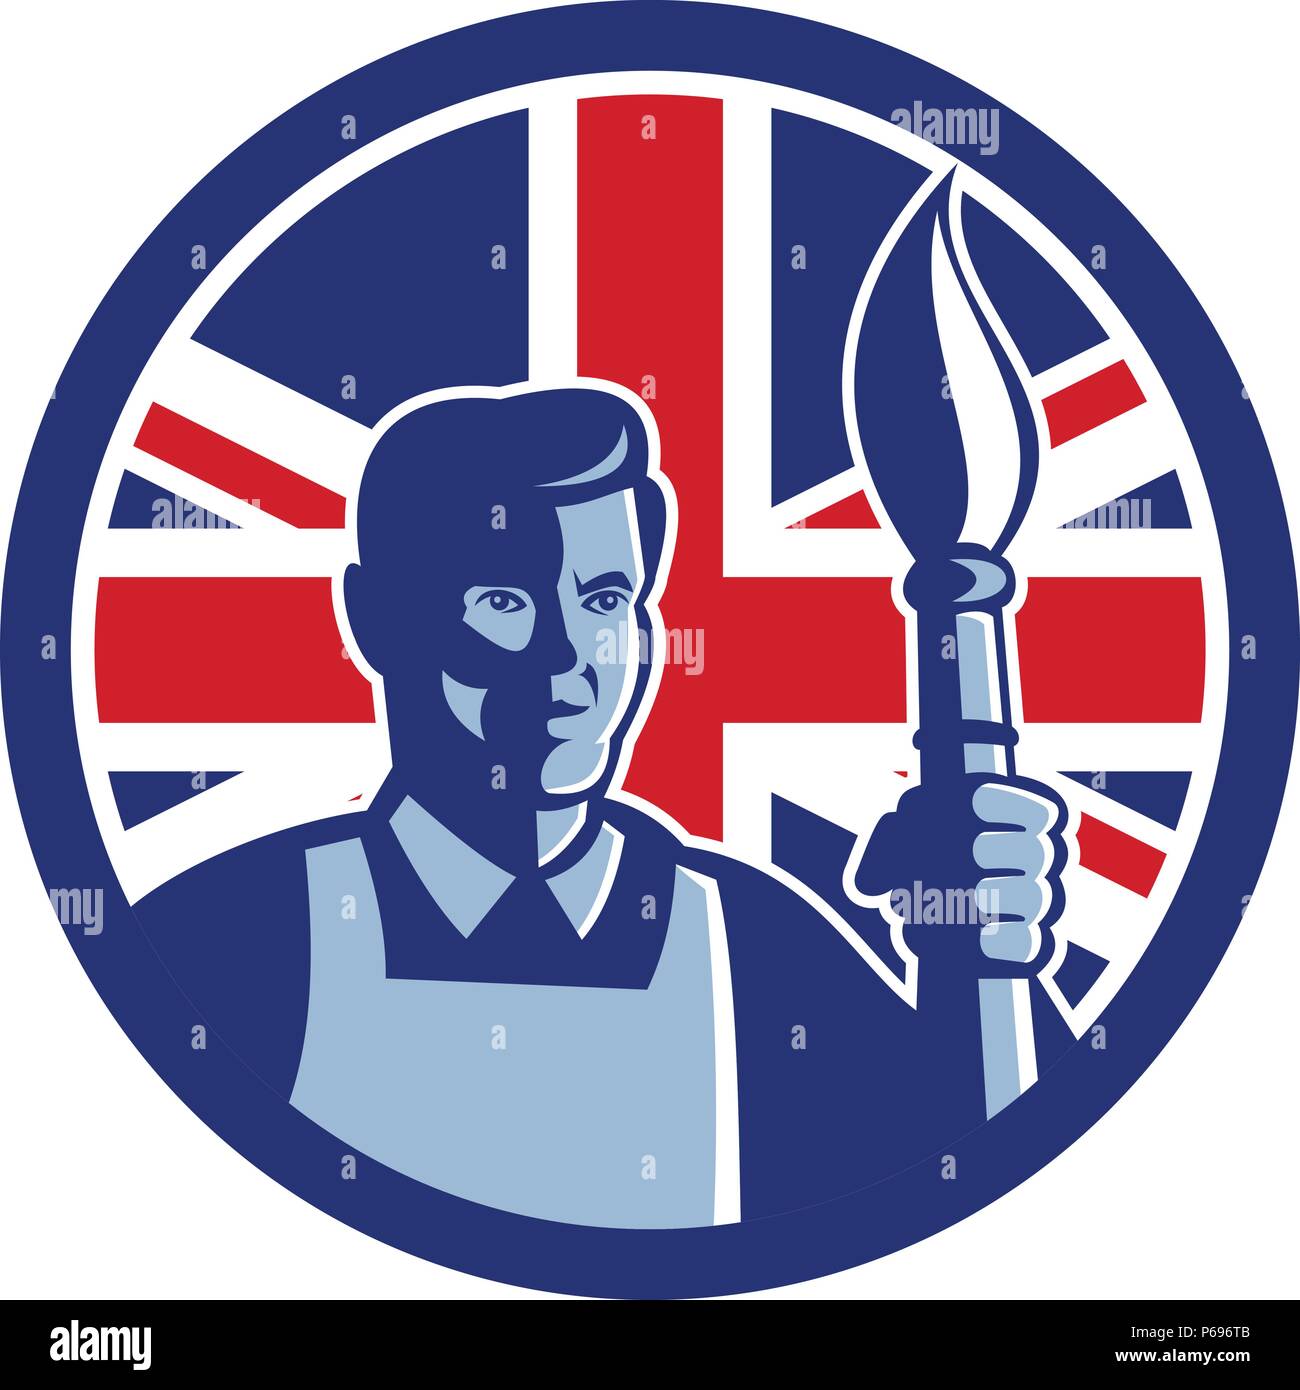 Icon retro style illustration of a British fine artist or painter holding paint brush with United Kingdom UK, Great Britain Union Jack flag set inside Stock Vector